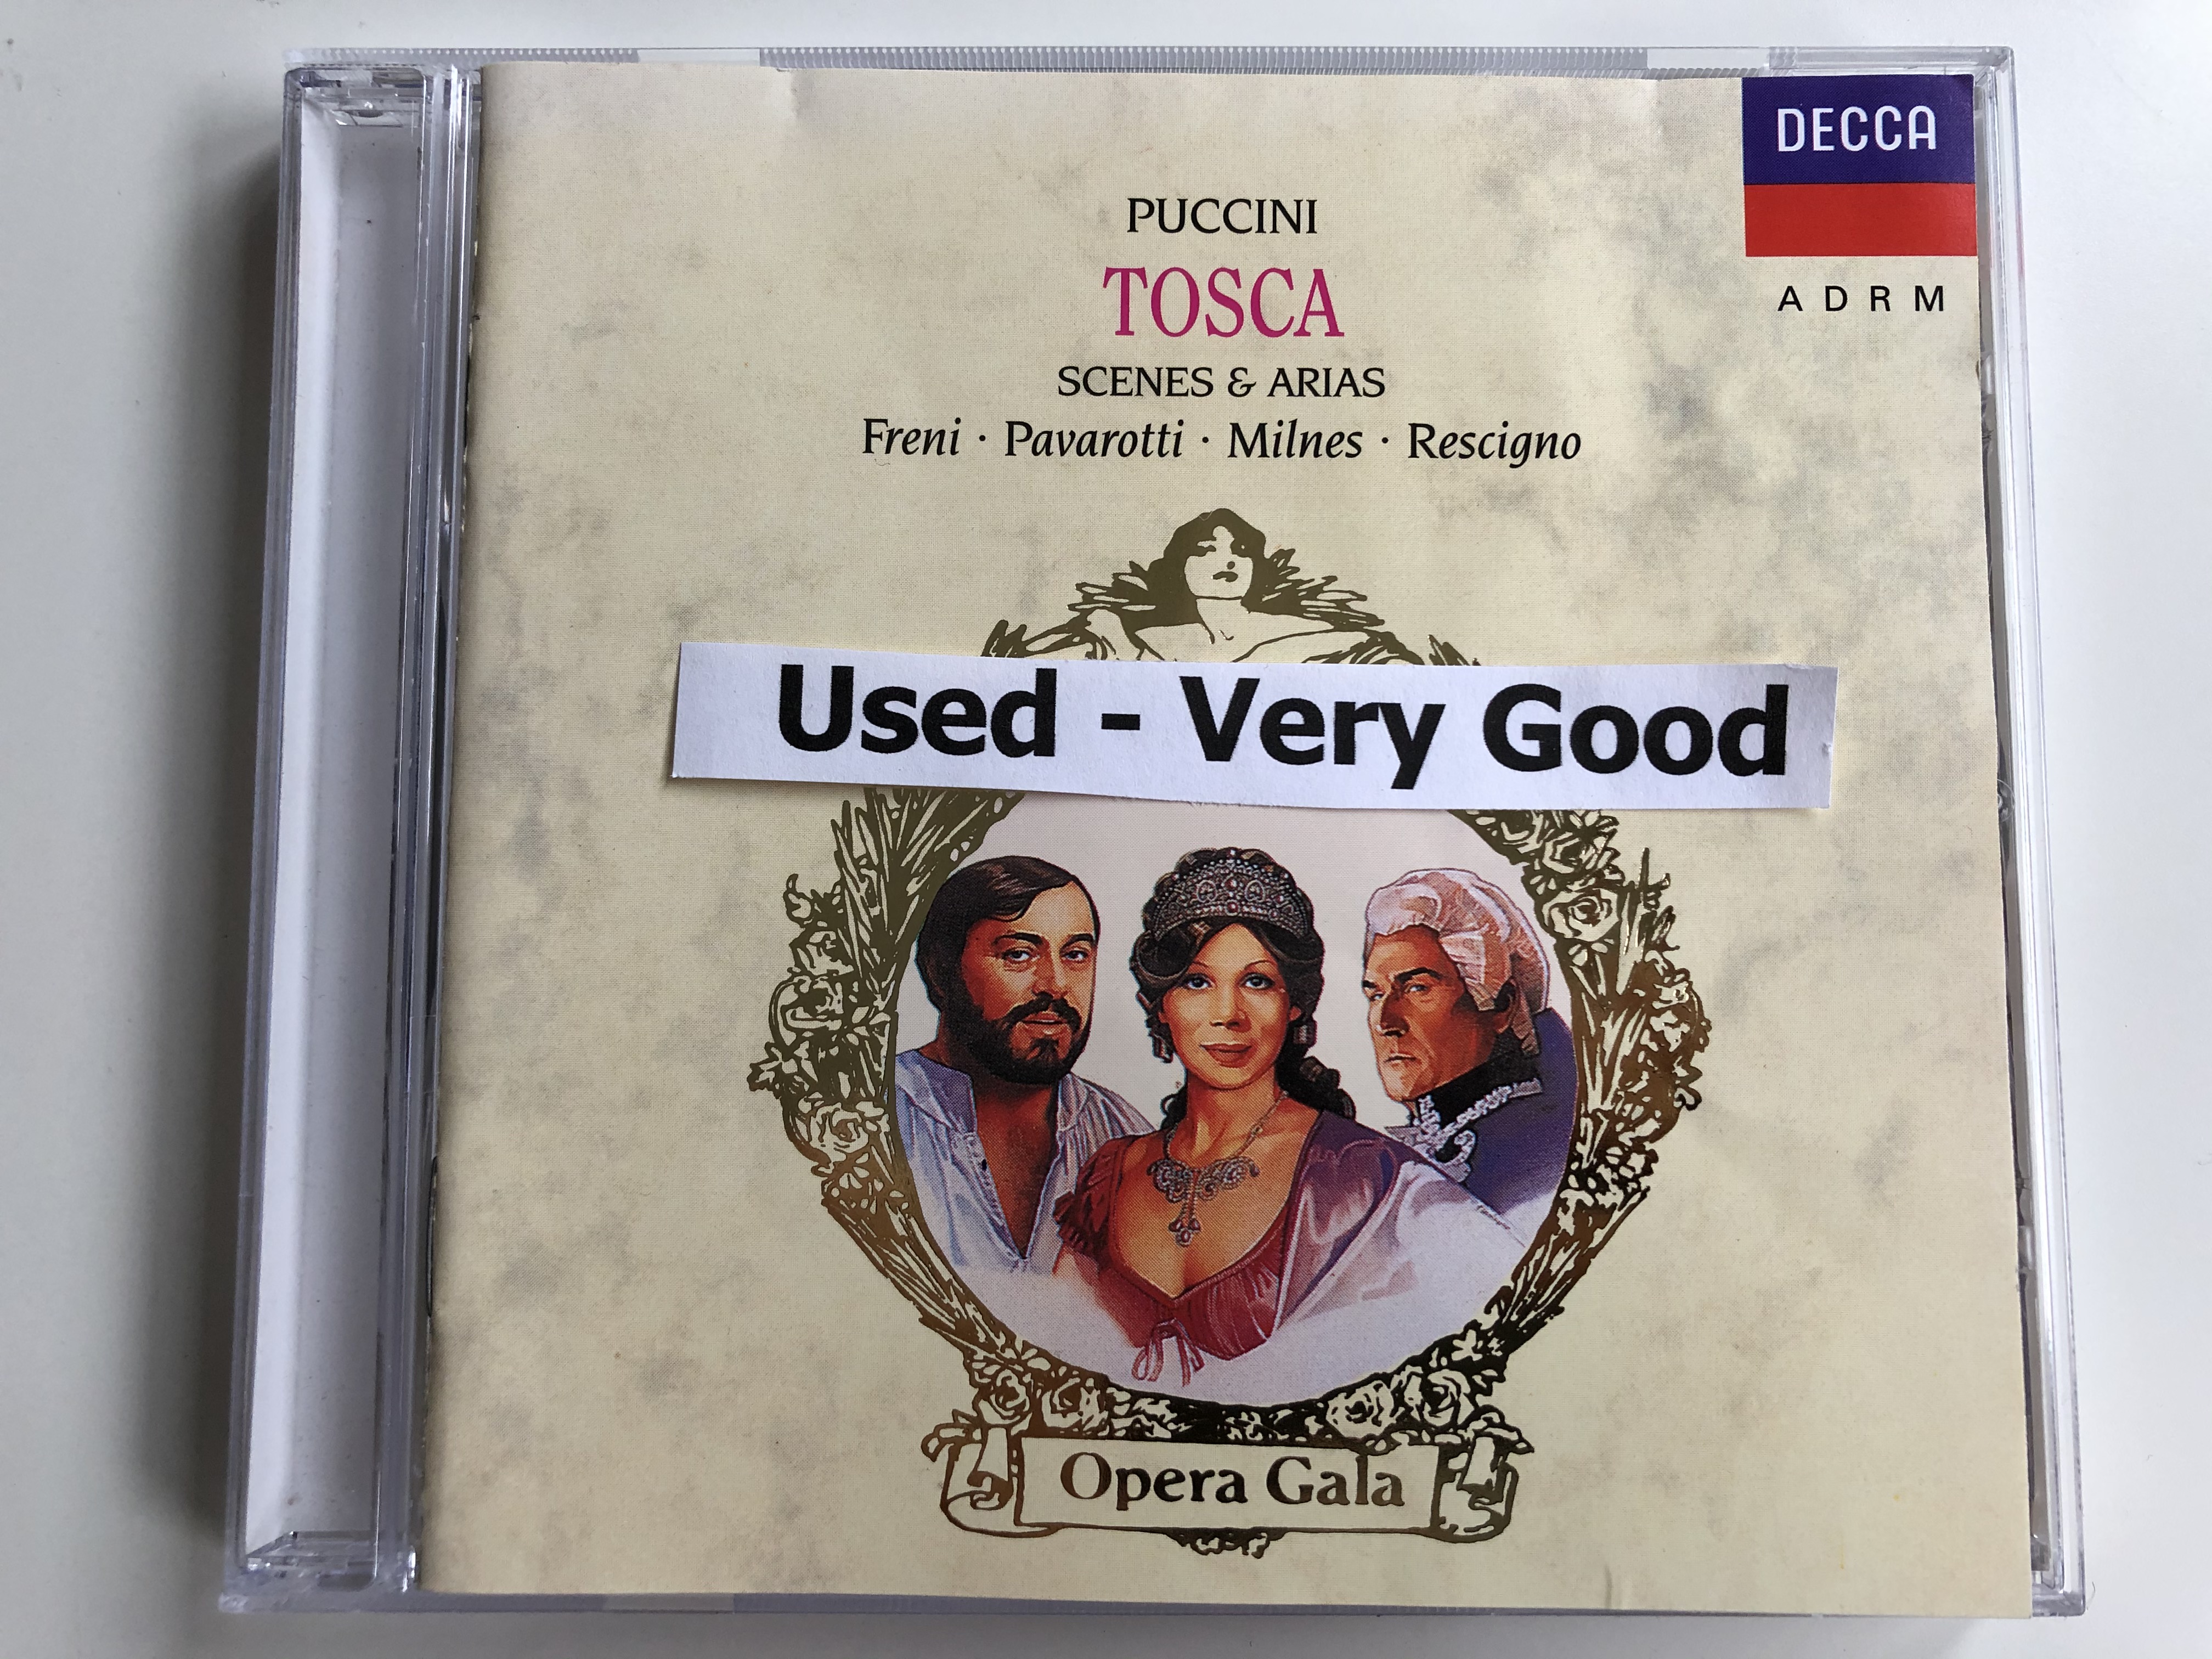 puccini-tosca-scenes-arias-freni-pavarotti-milnes-rescigno-decca-audio-cd-1992-421-888-2-1-.jpg